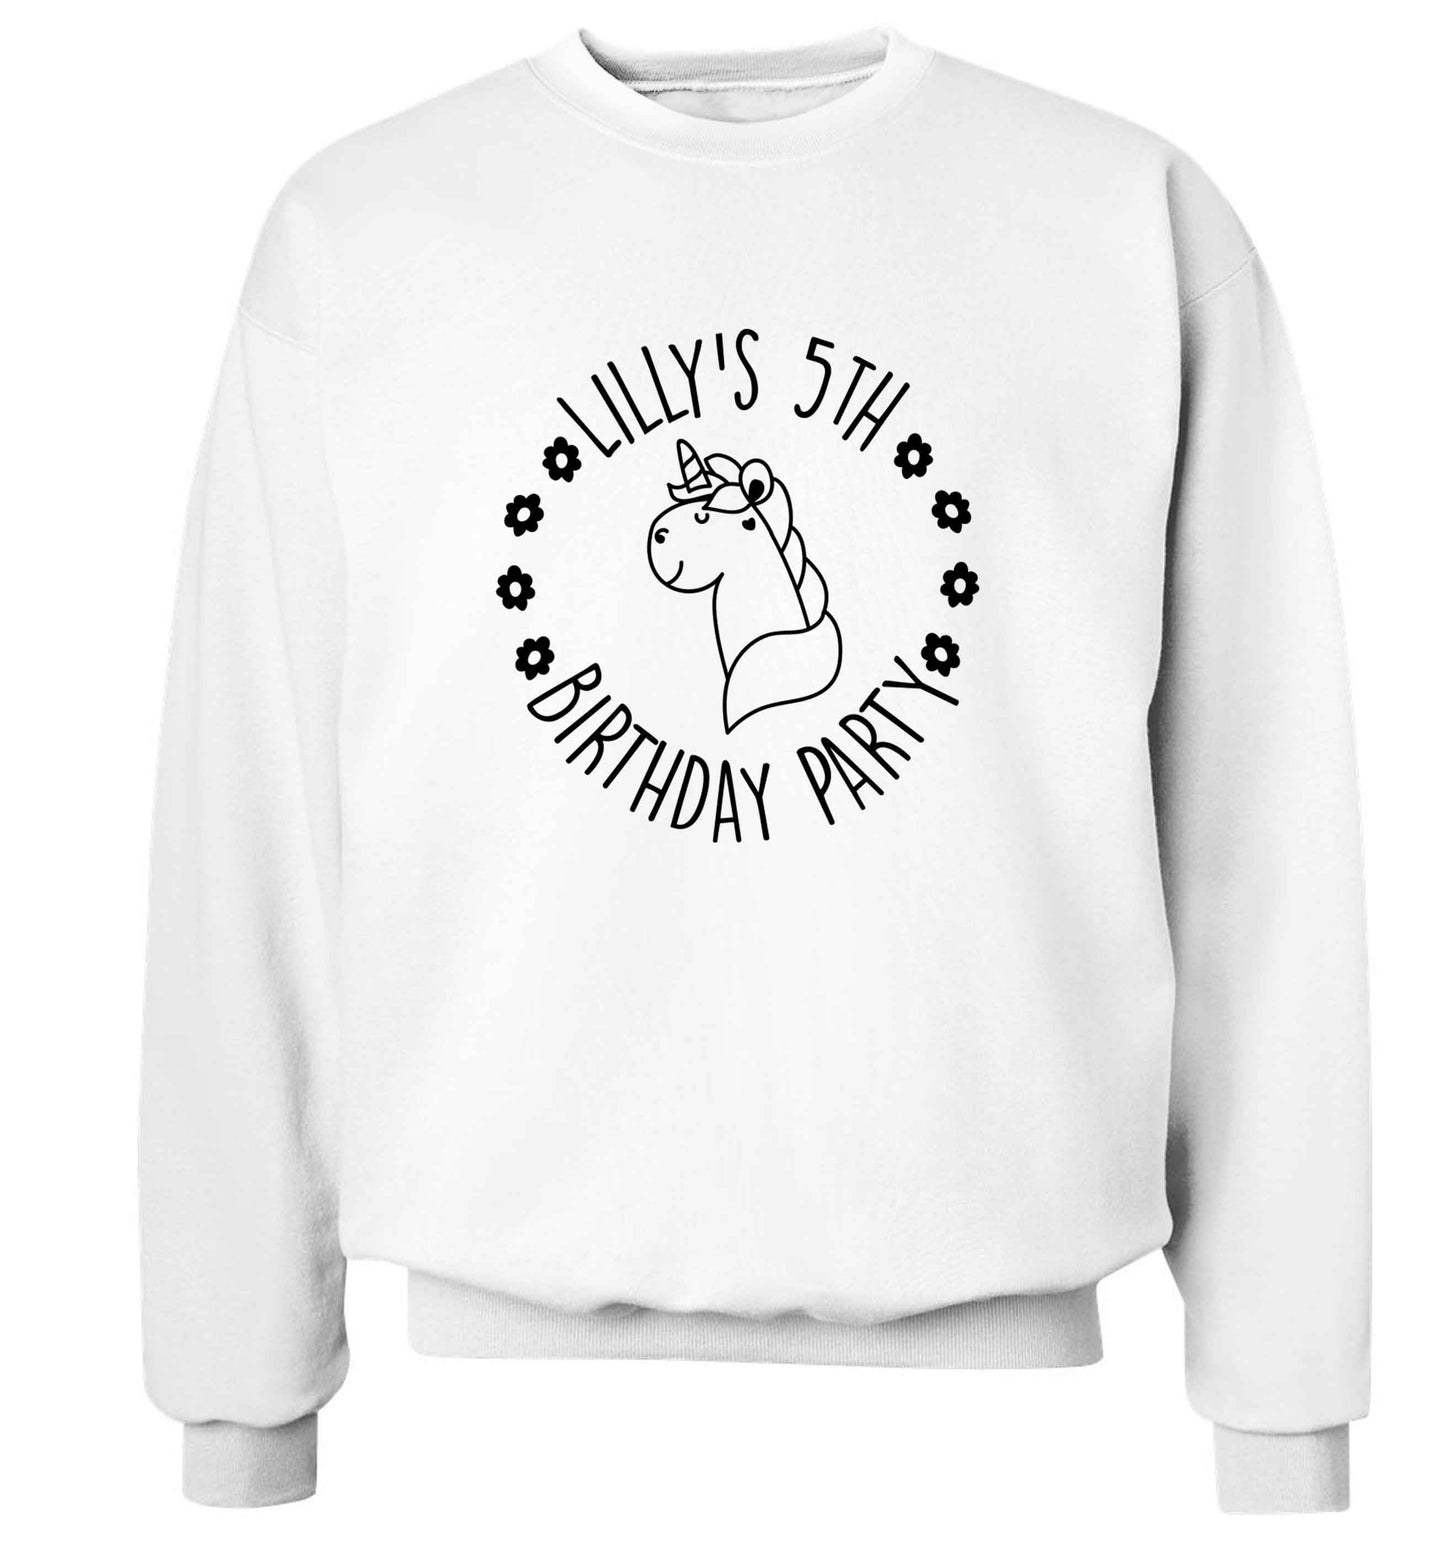 Personalised unicorn birthday party adult's unisex white sweater 2XL